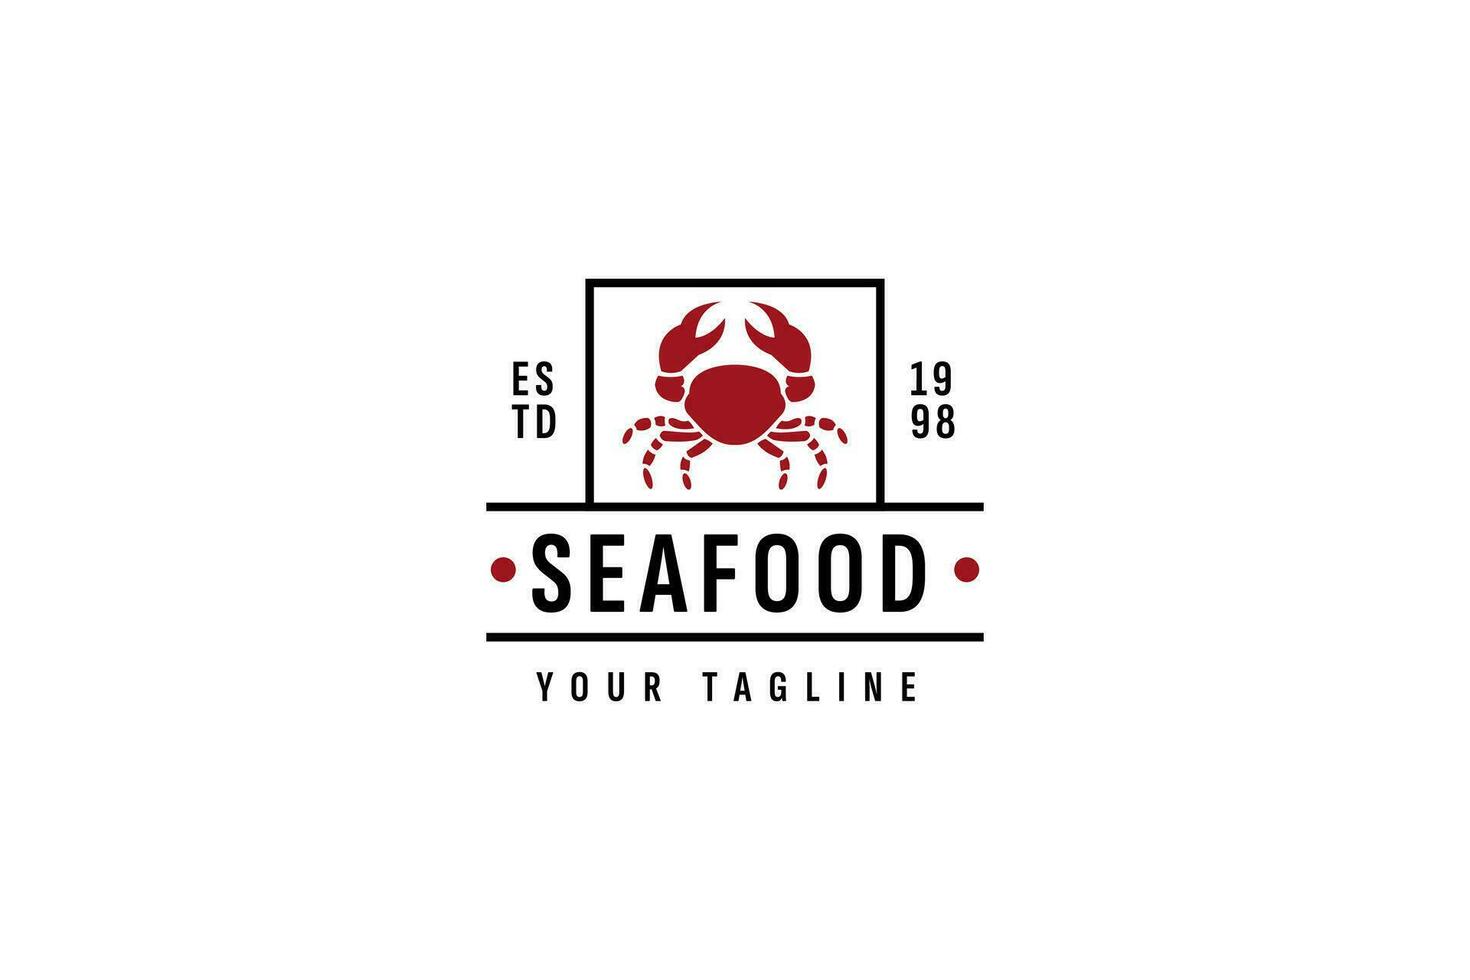 seafood logo vector icon illustration